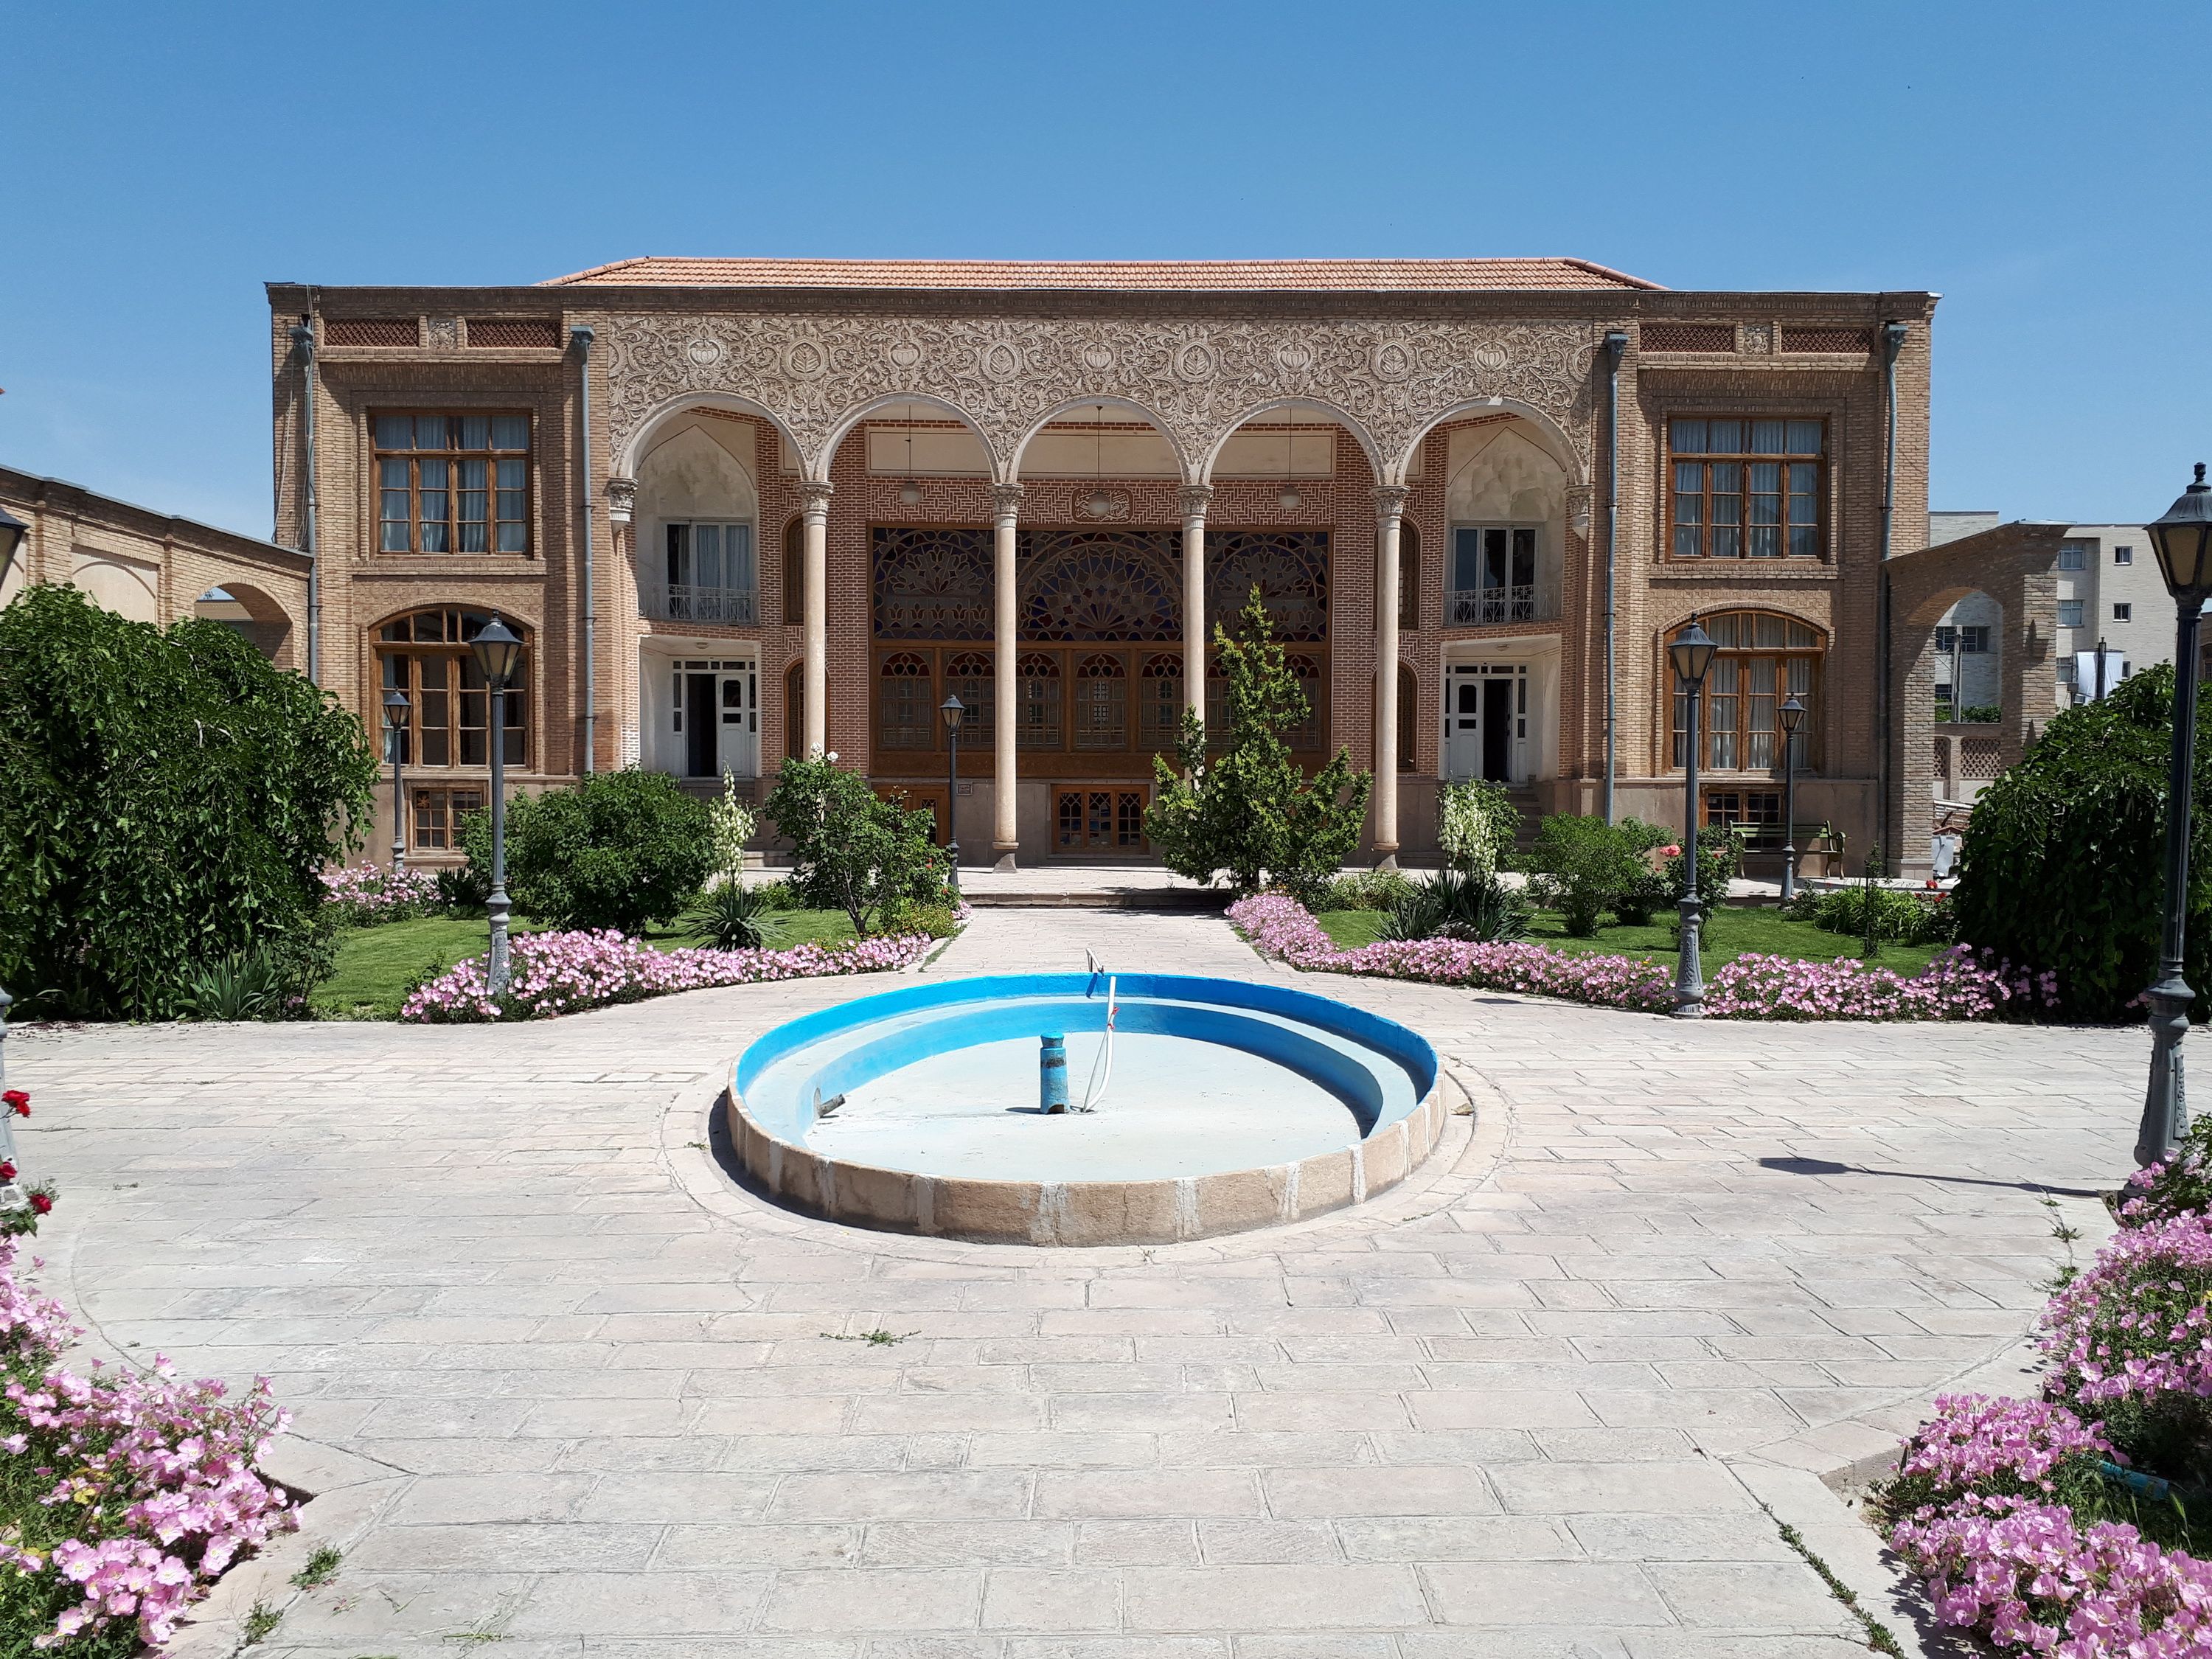 The Behnam Historical House